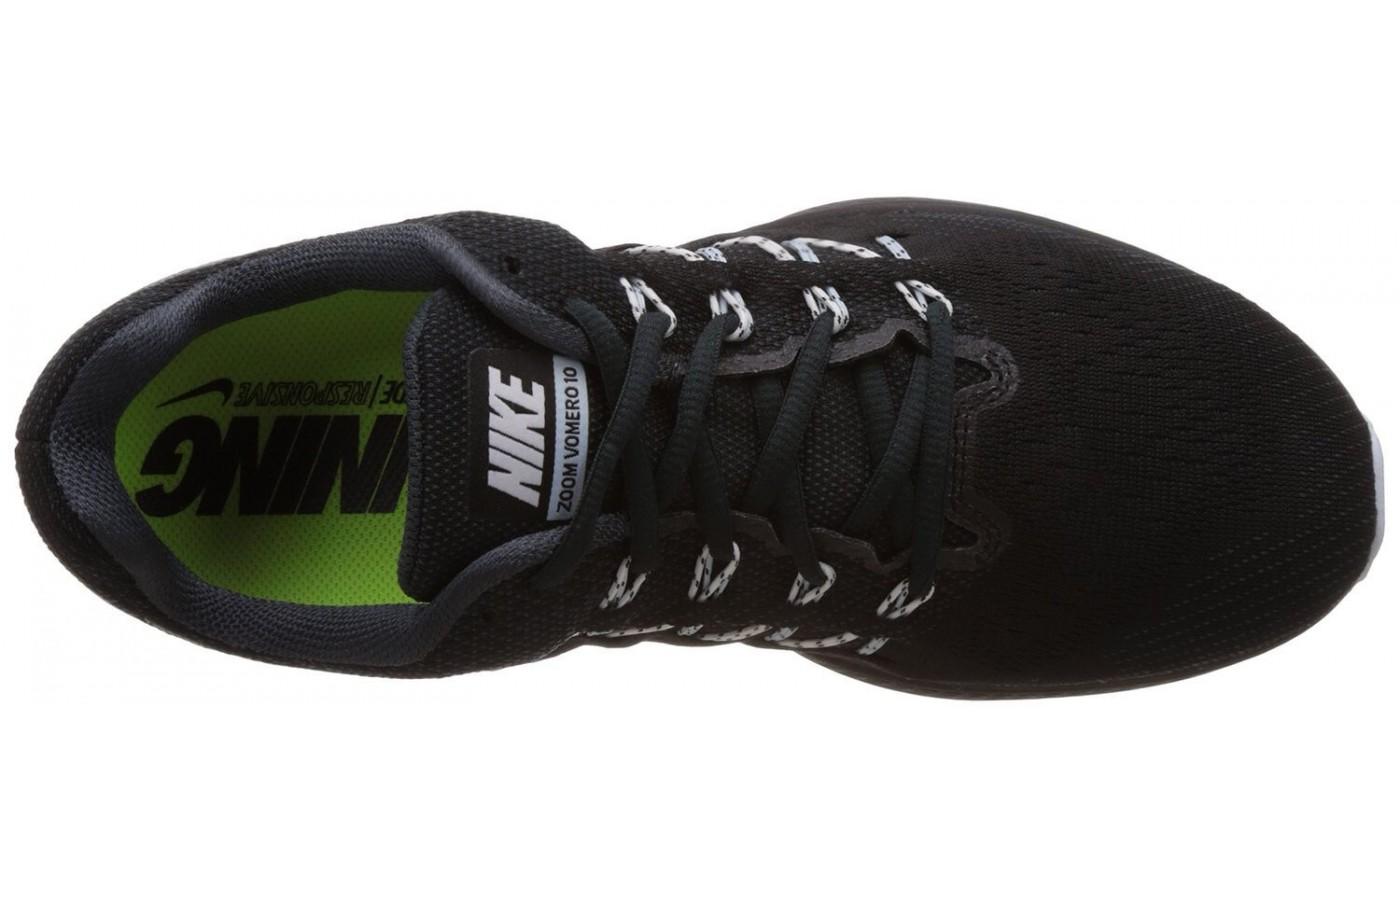 referir Habitar Banco Nike Air Zoom Vomero 10 Fully Reviewed | RunnerClick